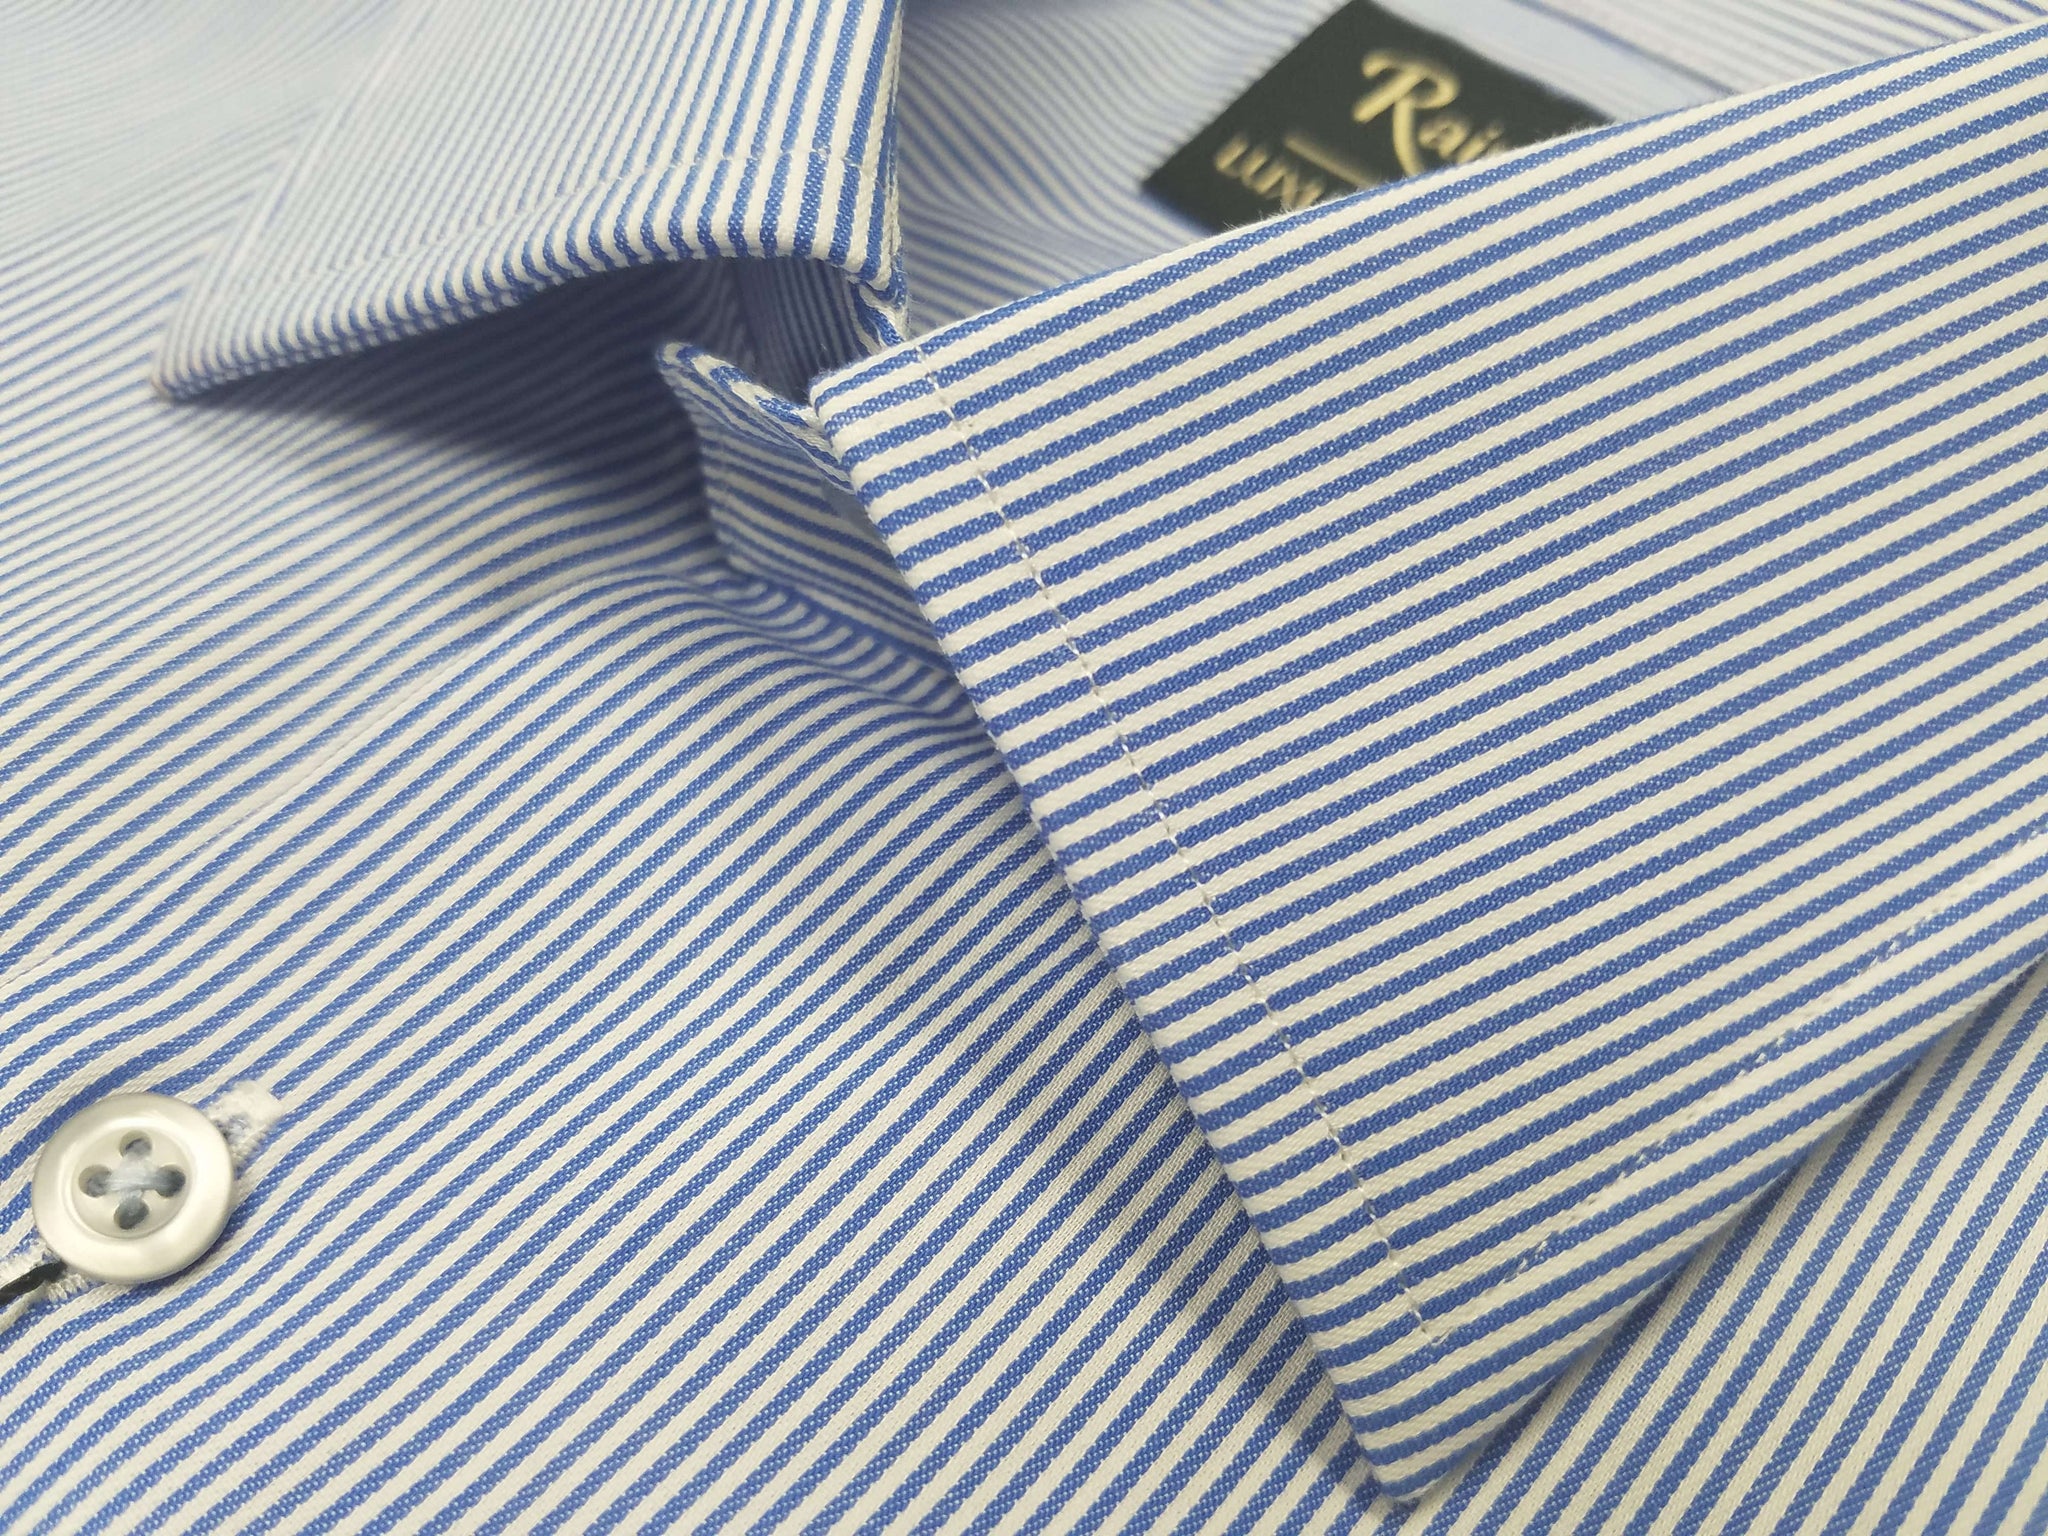 Rainwater's Spread Collar Banker Stripe Dress Shirt - Rainwater's Men's Clothing and Tuxedo Rental